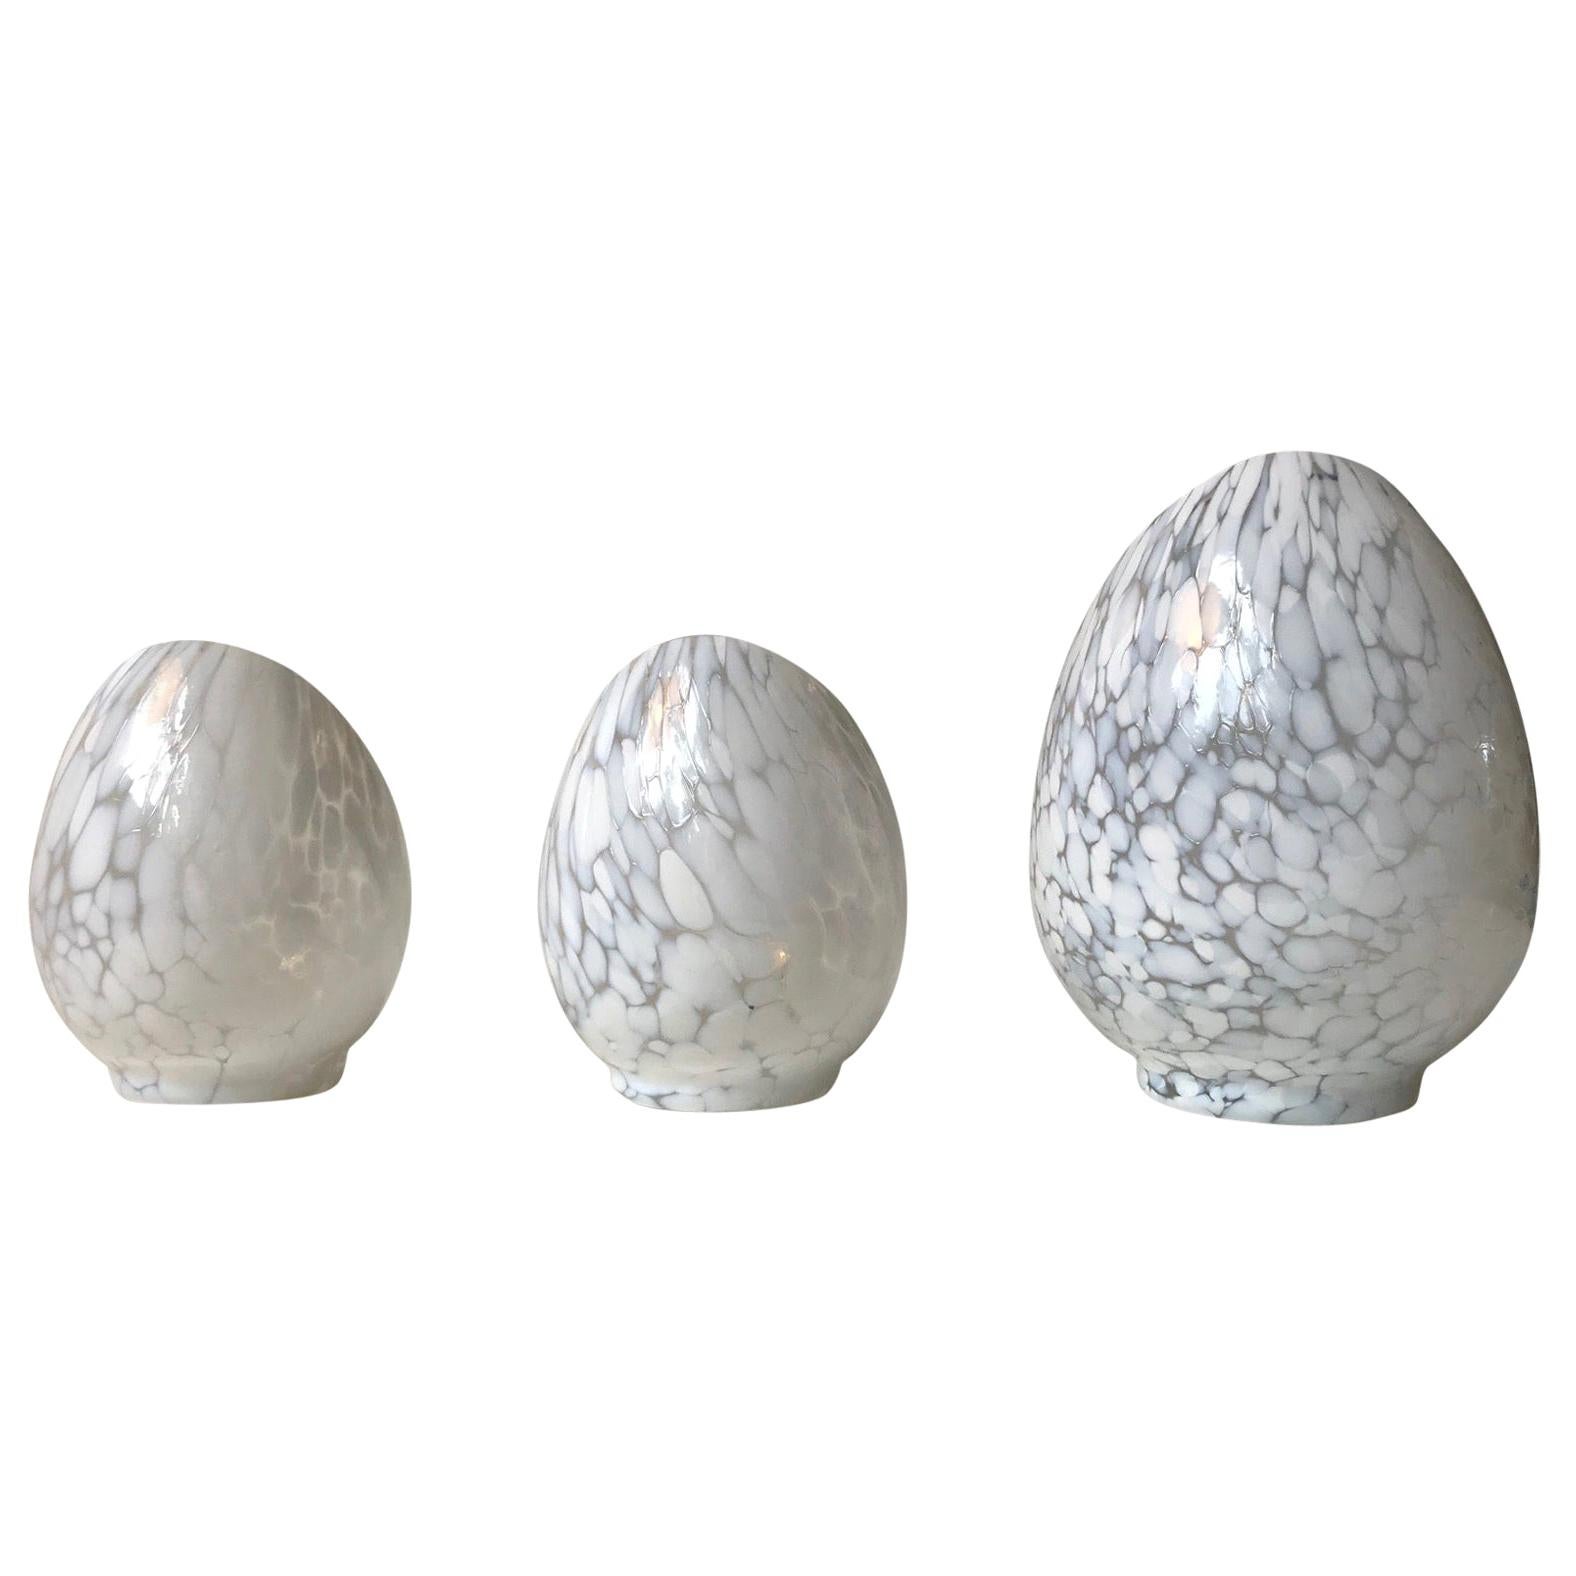 Trio of Vintage Egg Shaped Blister Glass Candleholders by Ingegerd Råman